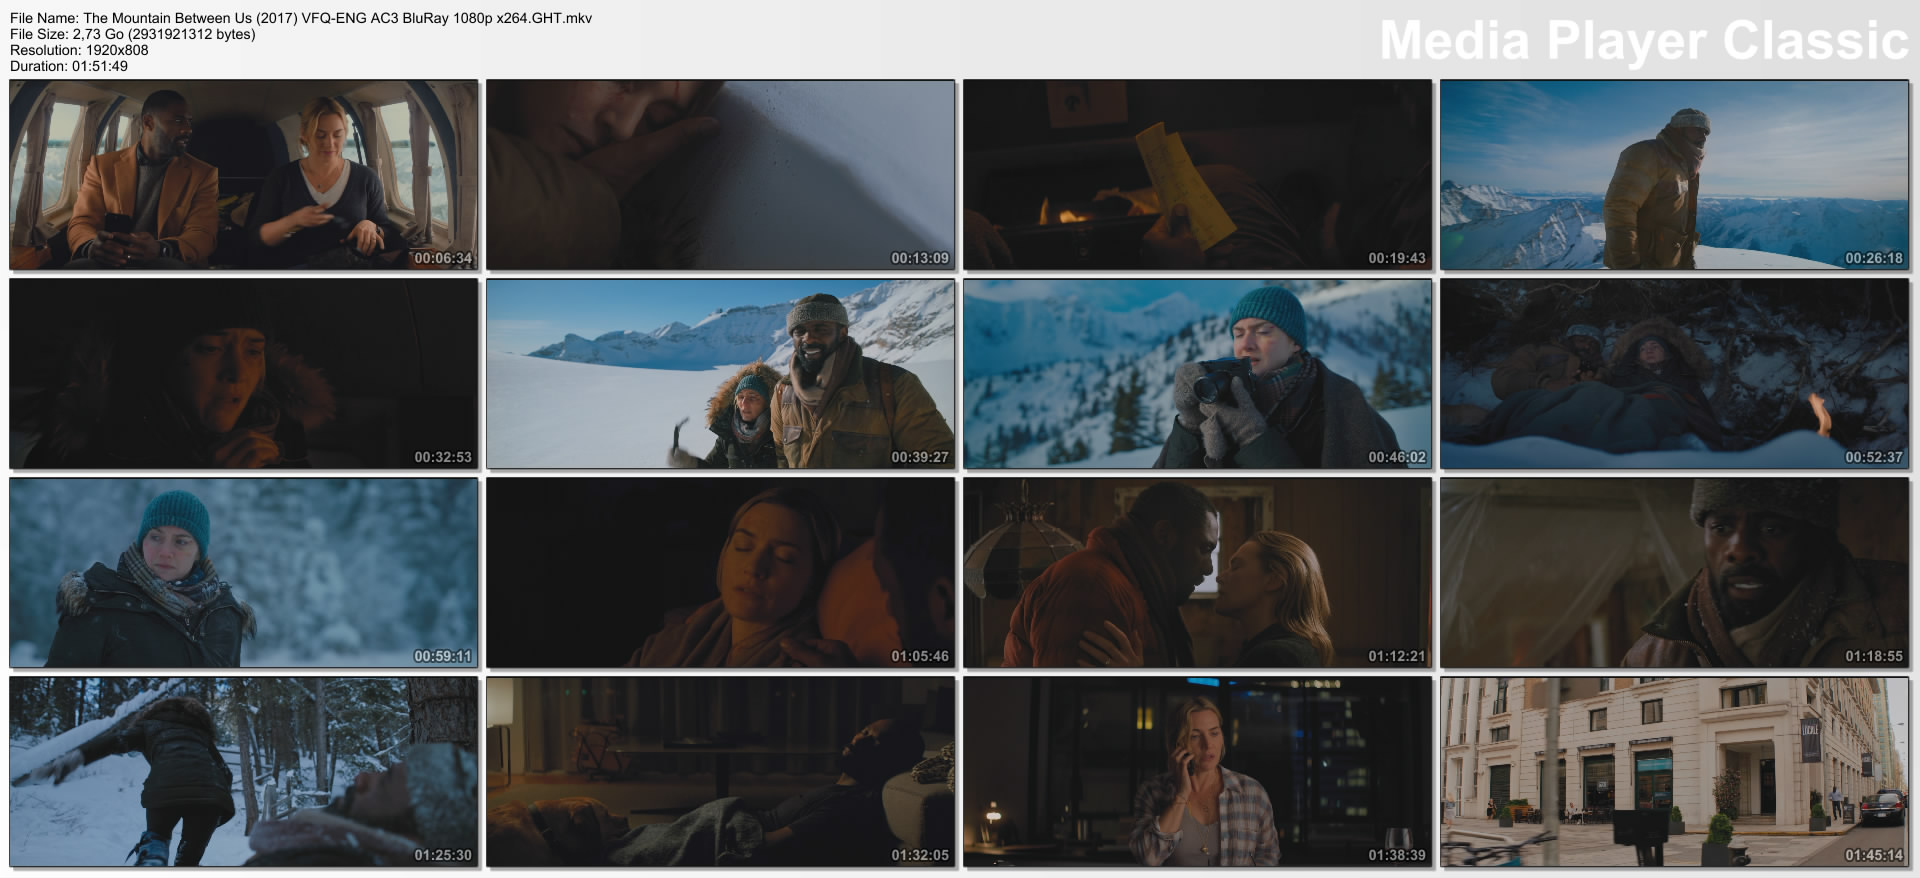 The Mountain Between Us (2017) VFQ-ENG AC3 BluRay 1080p x264.GHT